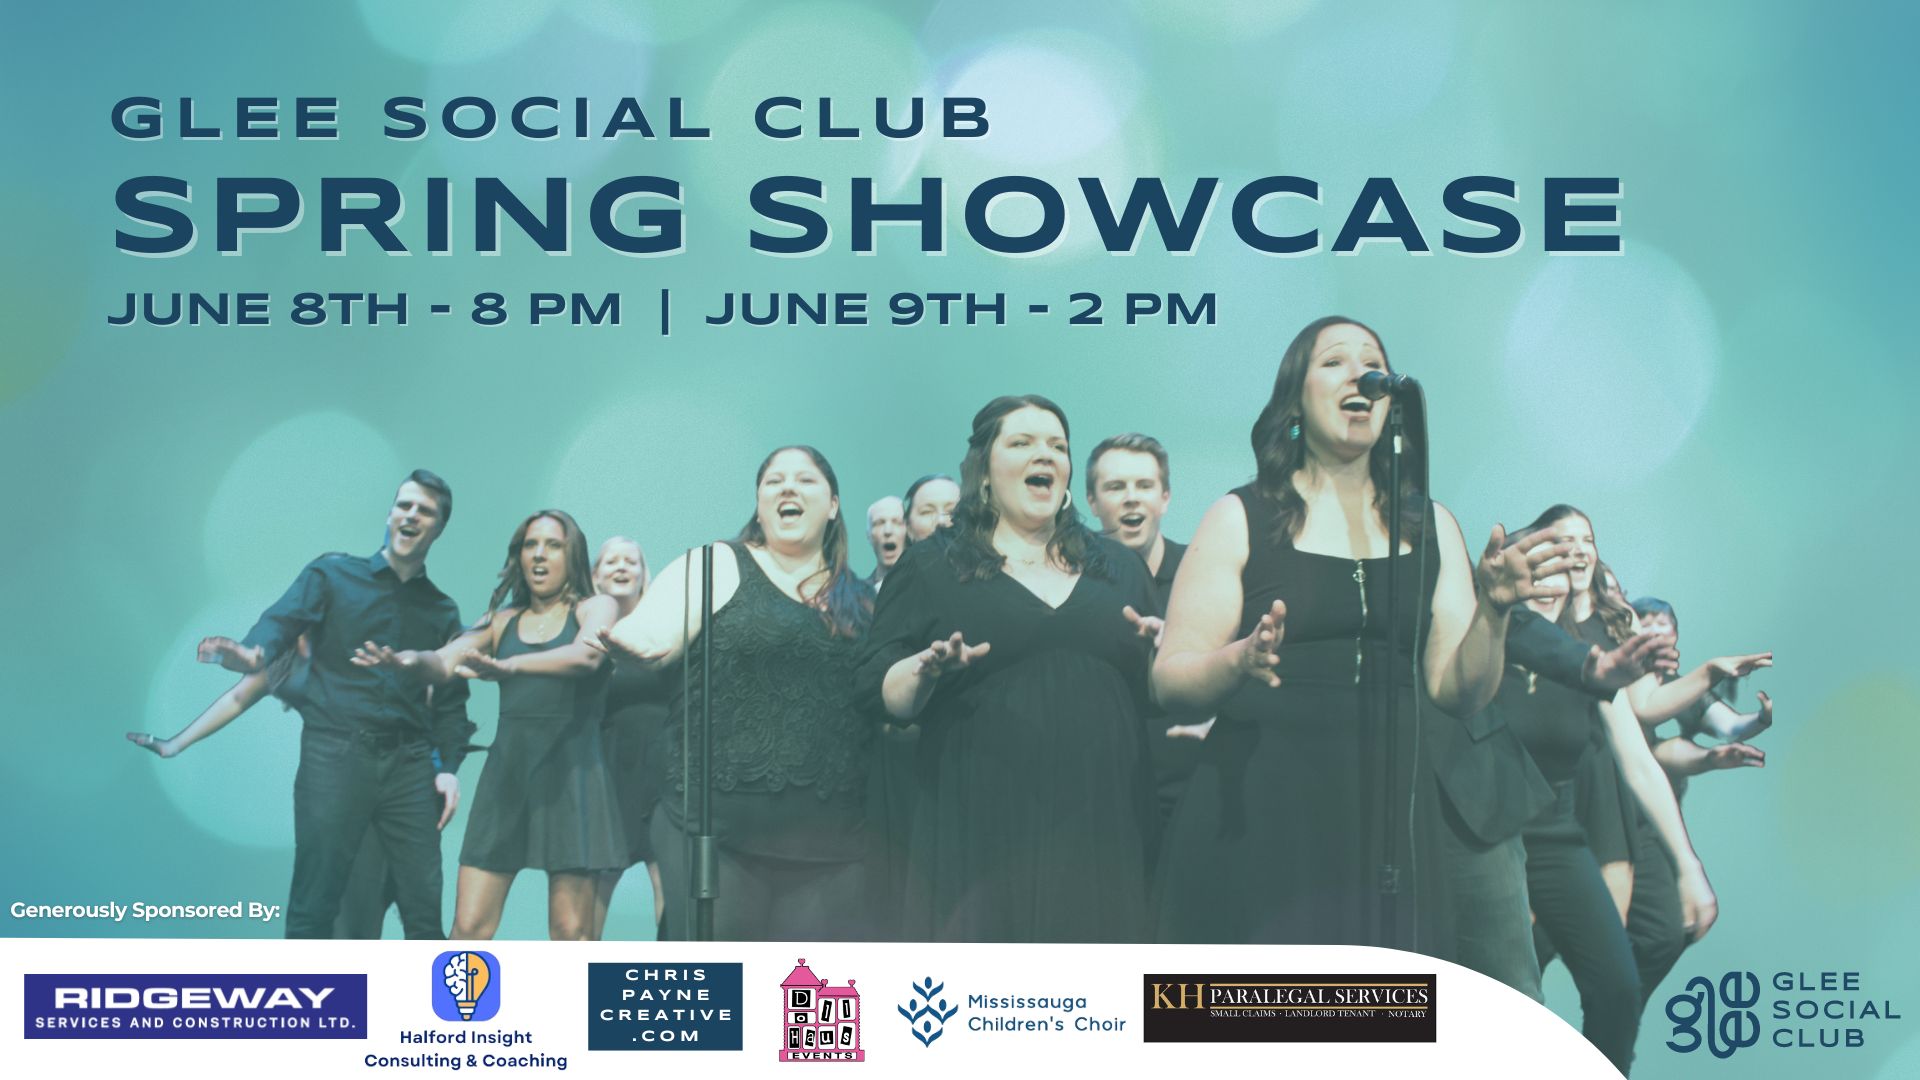 Glee Social Club Spring Showcase